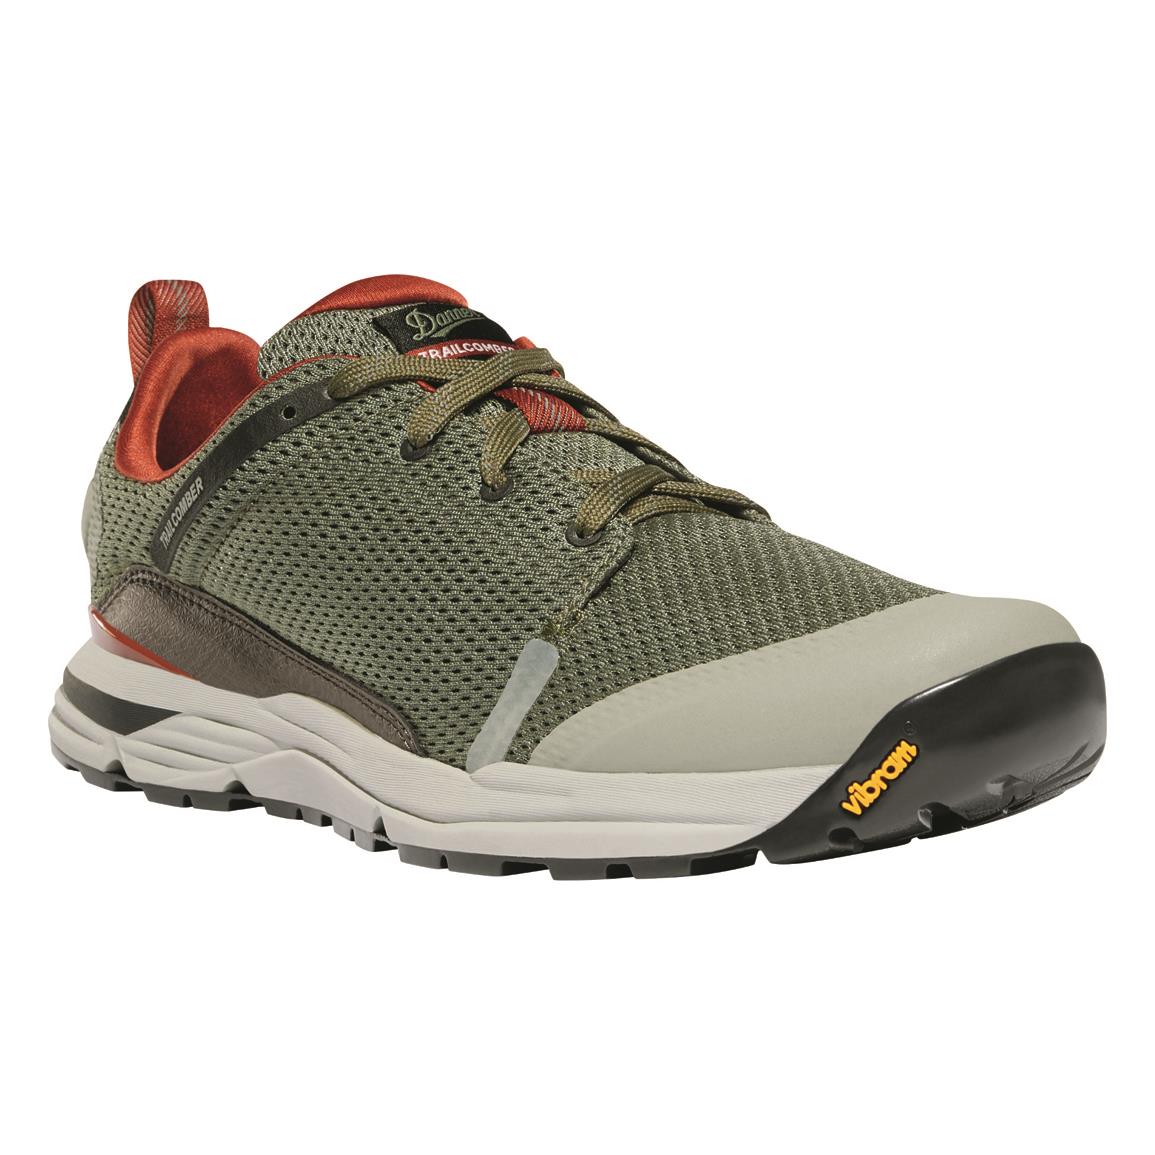 Danner Men's Trailcomber Hiking Shoes, Lichen/picante